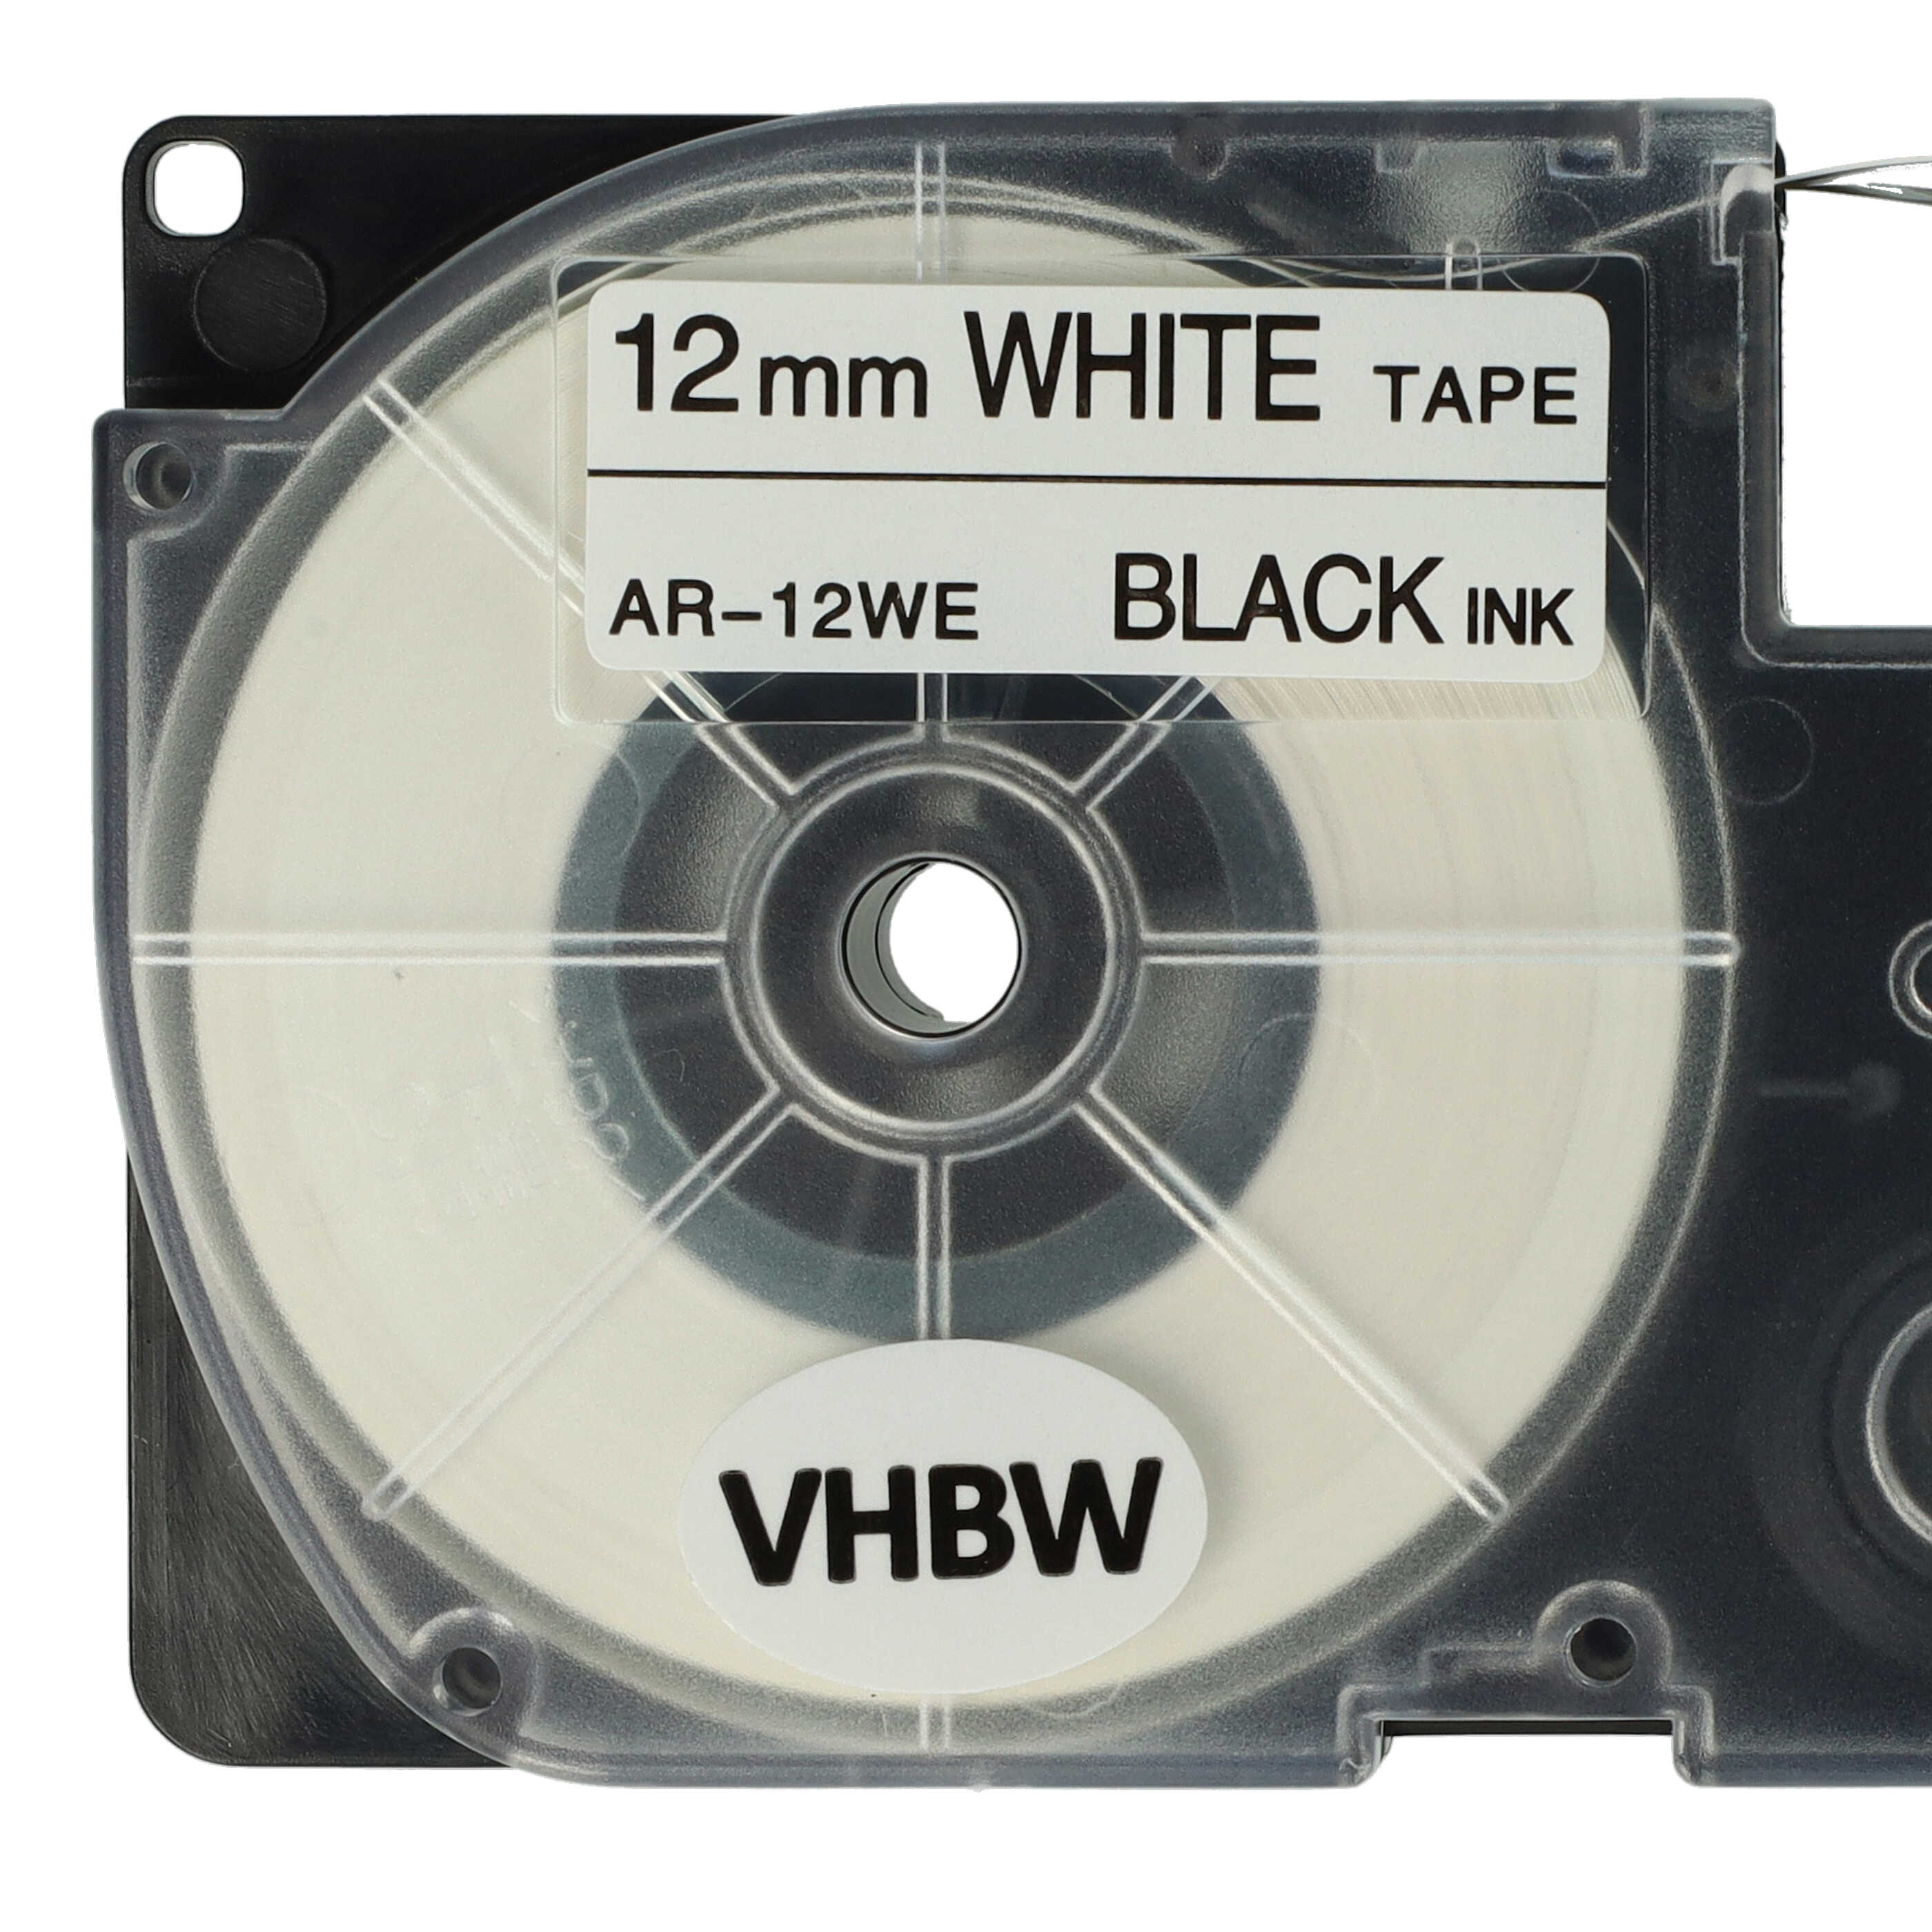 10x Casete cinta escritura reemplaza Casio XR-12WE, XR-12WE1 Negro su Blanco